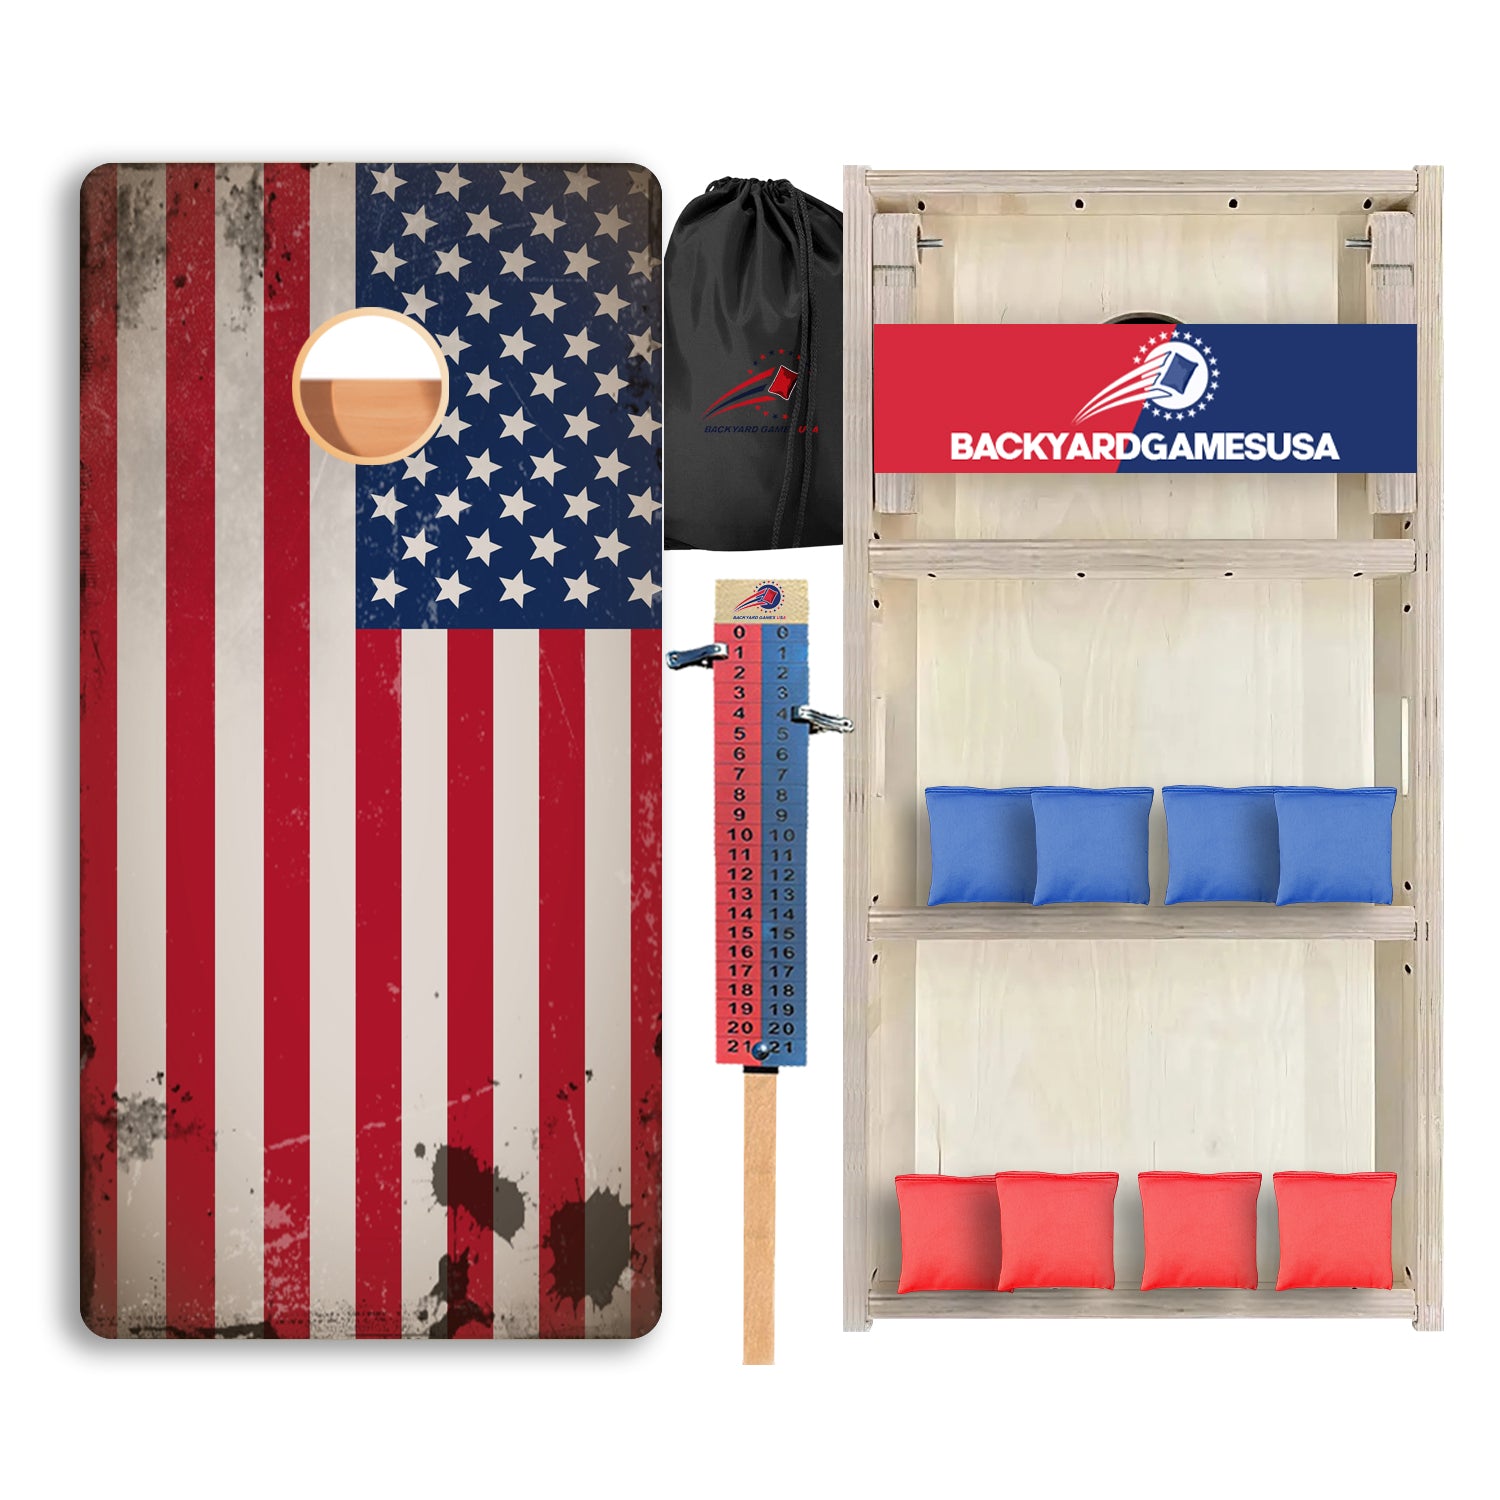 Paint Flag Professional Cornhole Boards